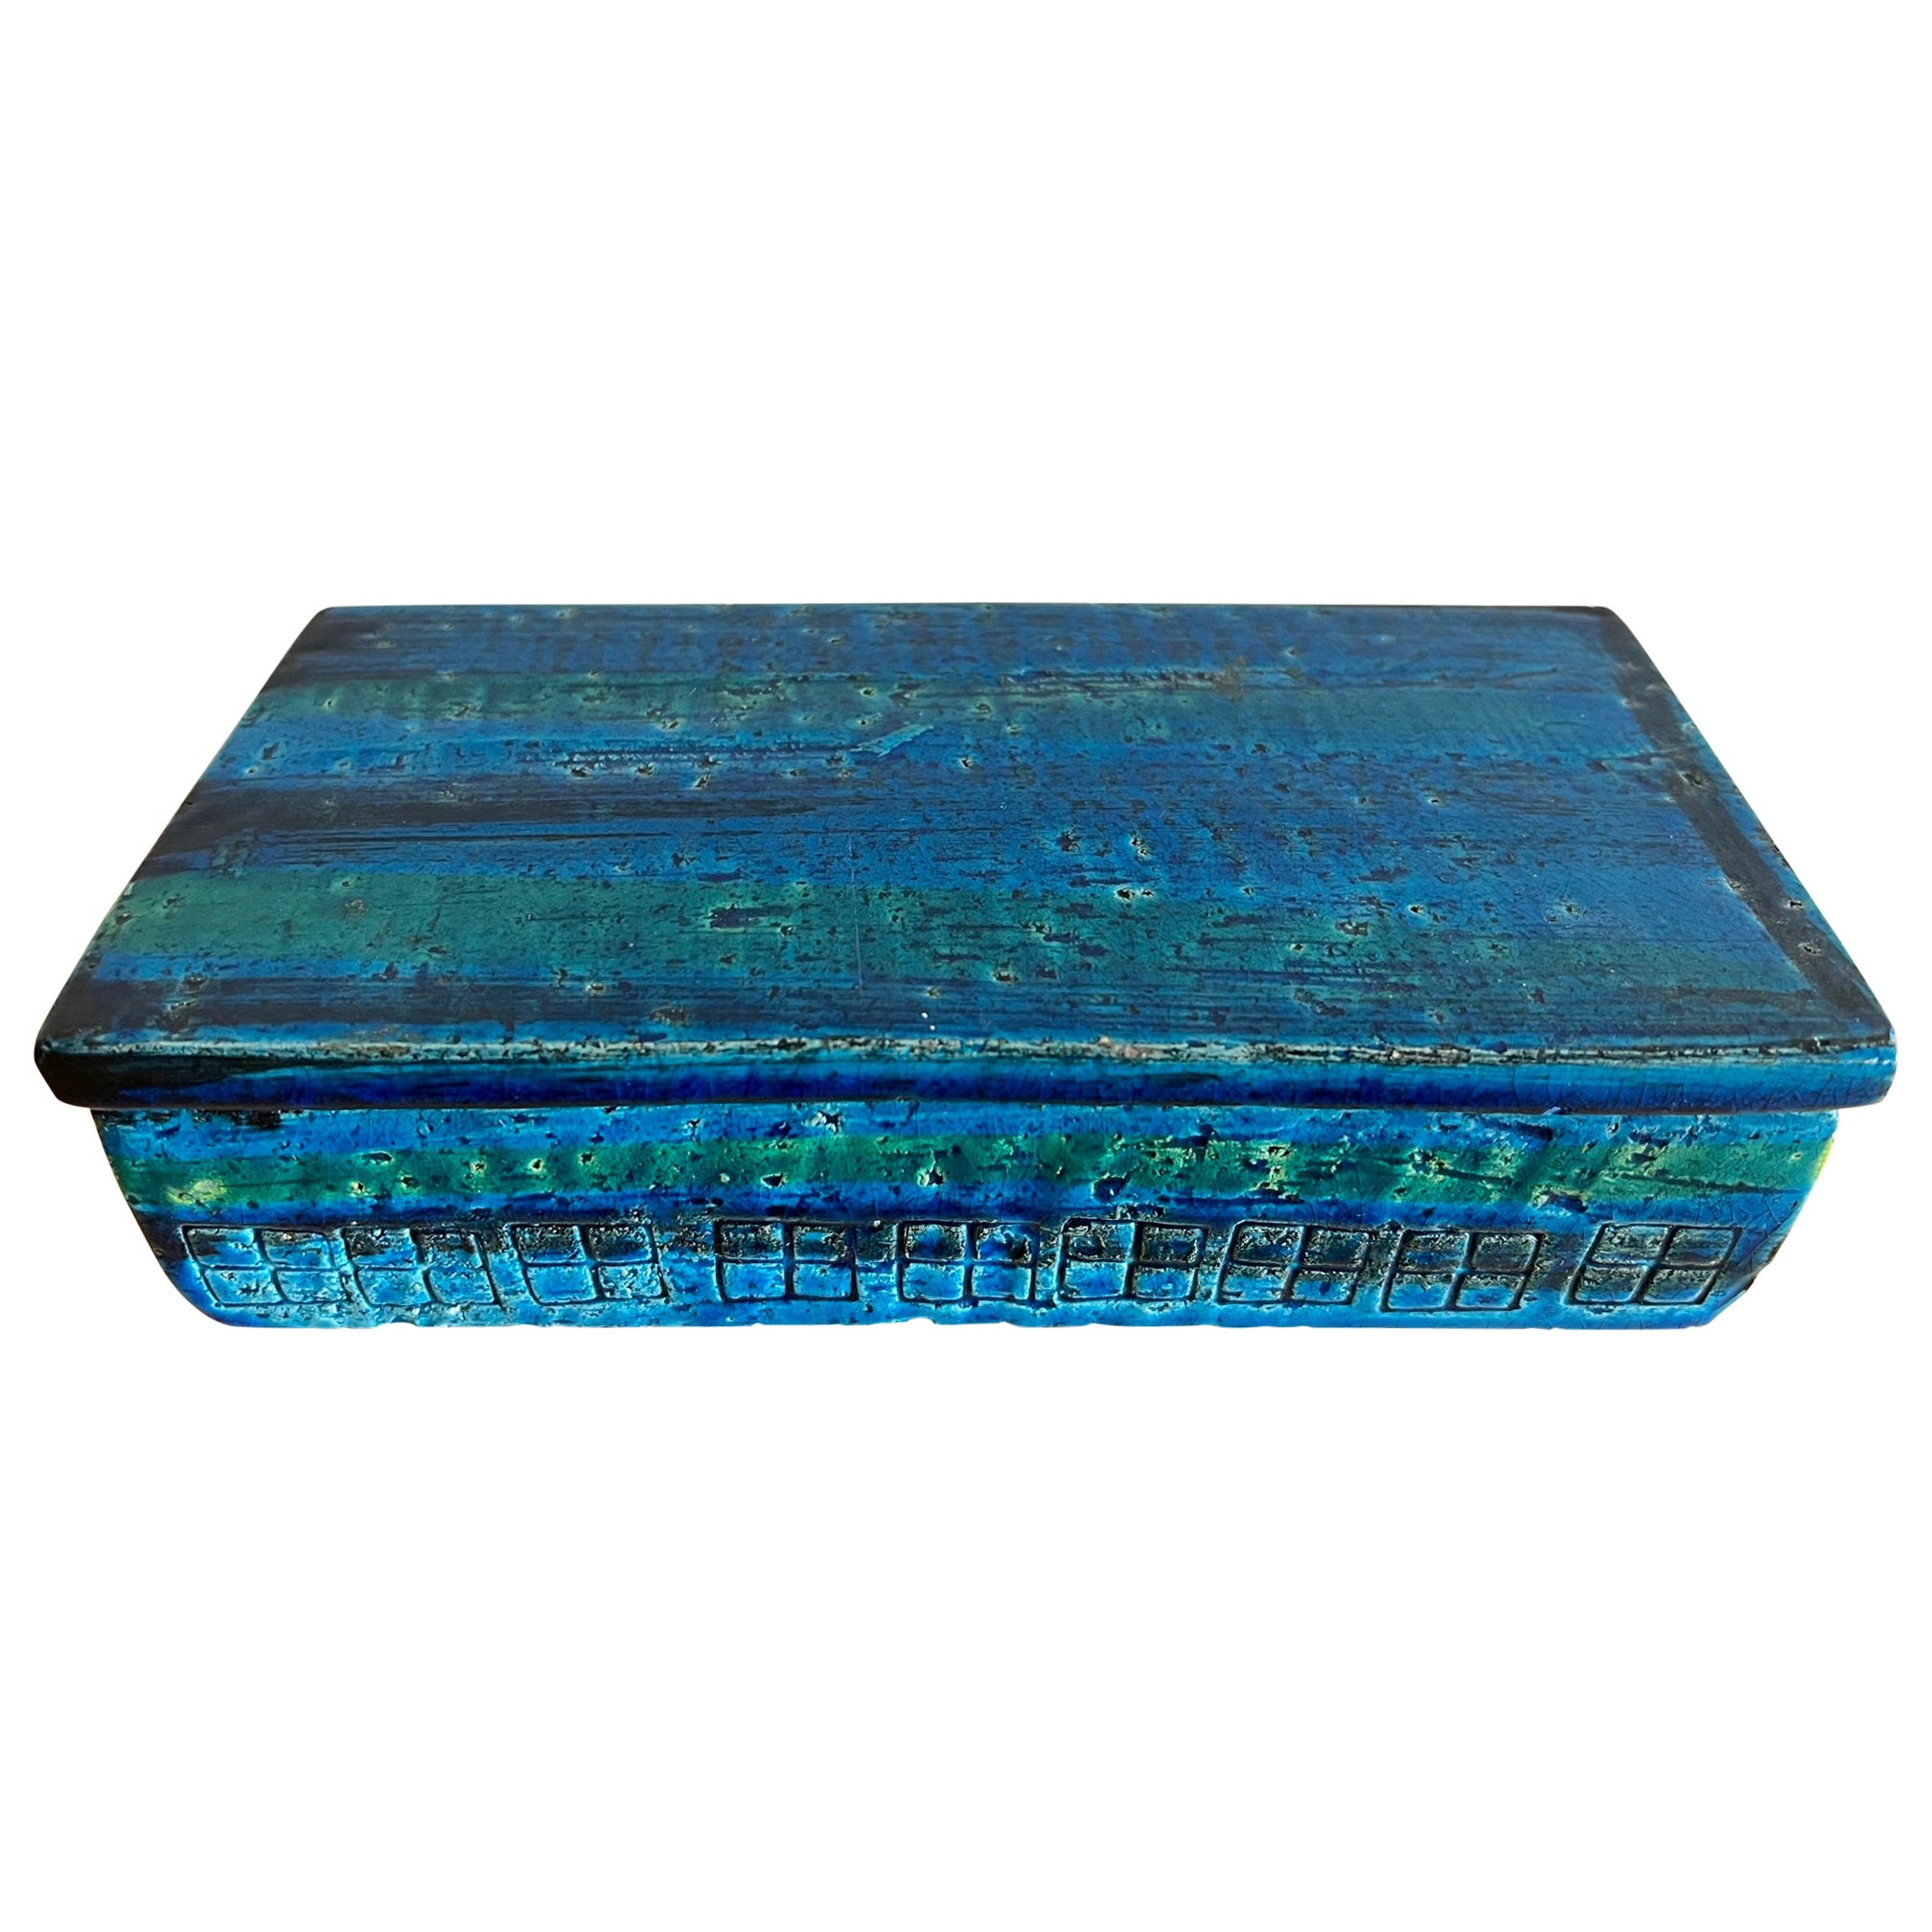 lidded box with vintage lace initial Blue ceramic bonbonni\u00e8re or jewellery box A